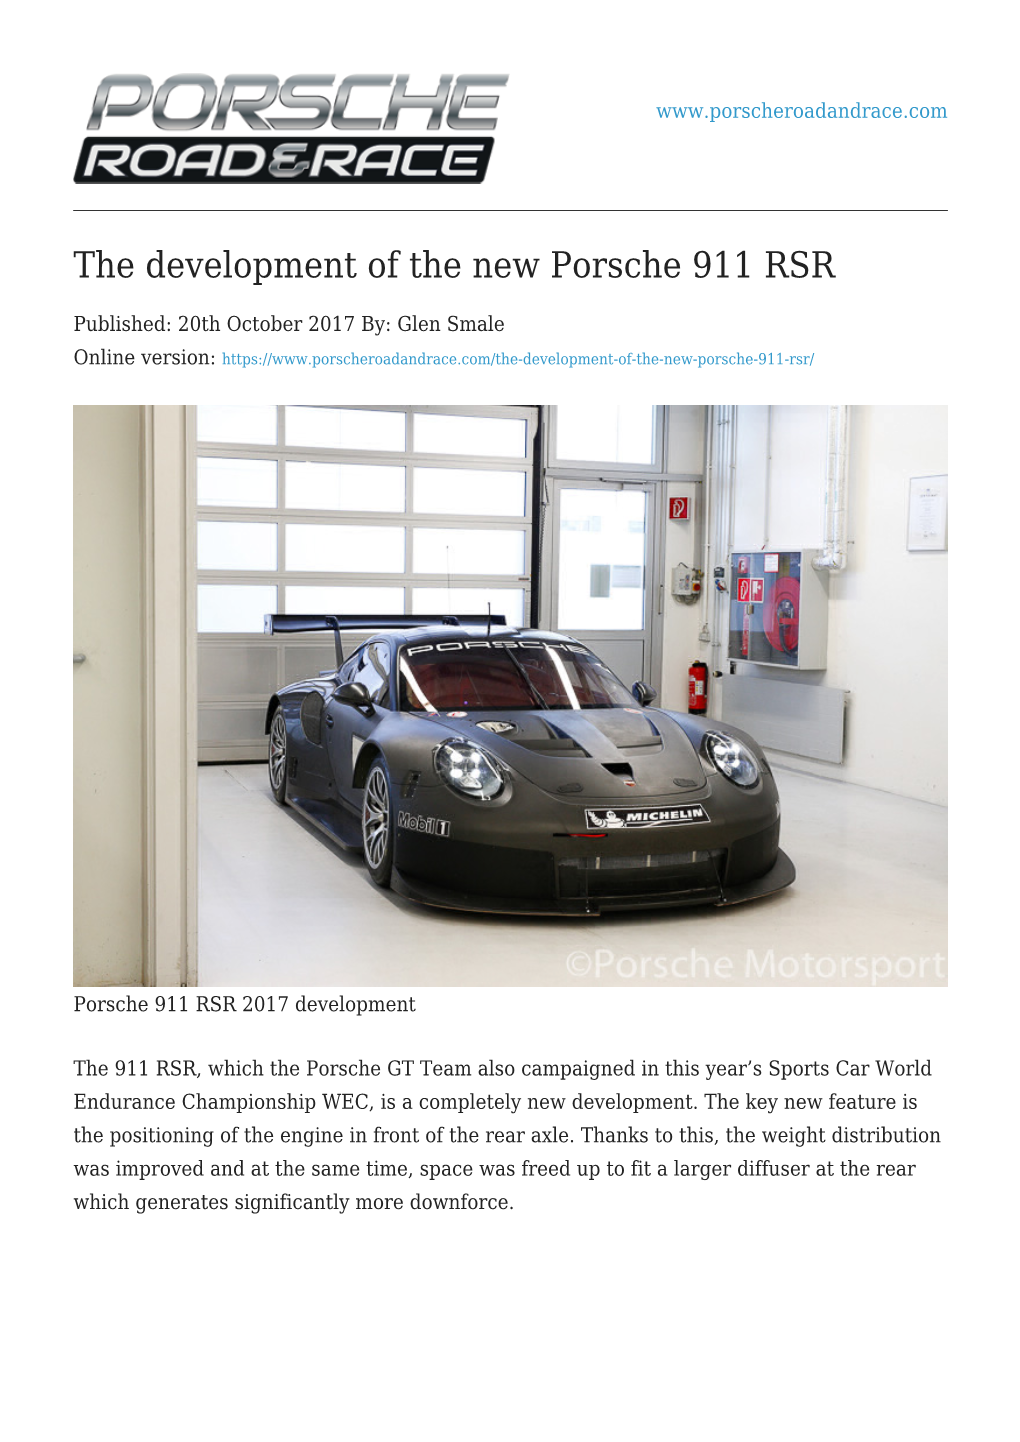 The Development of the New Porsche 911 RSR